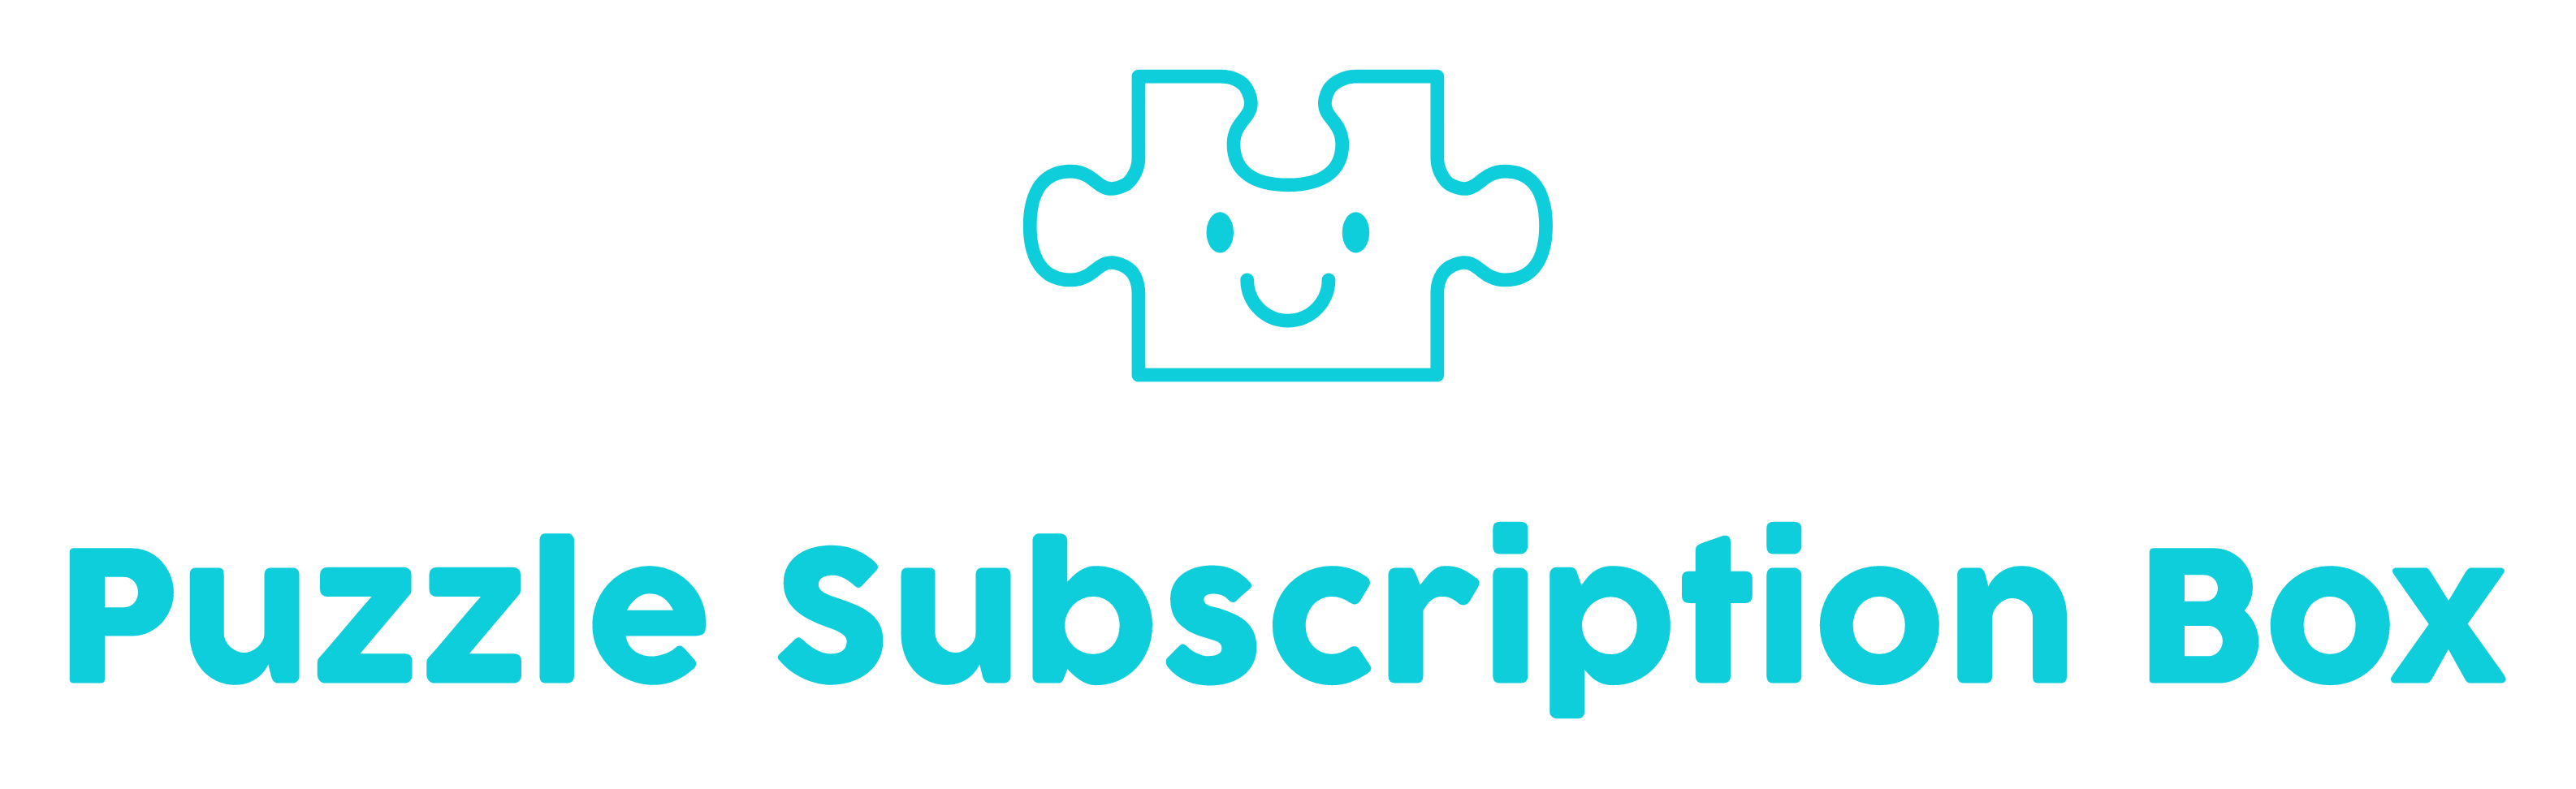 Puzzle Subscription Box logo